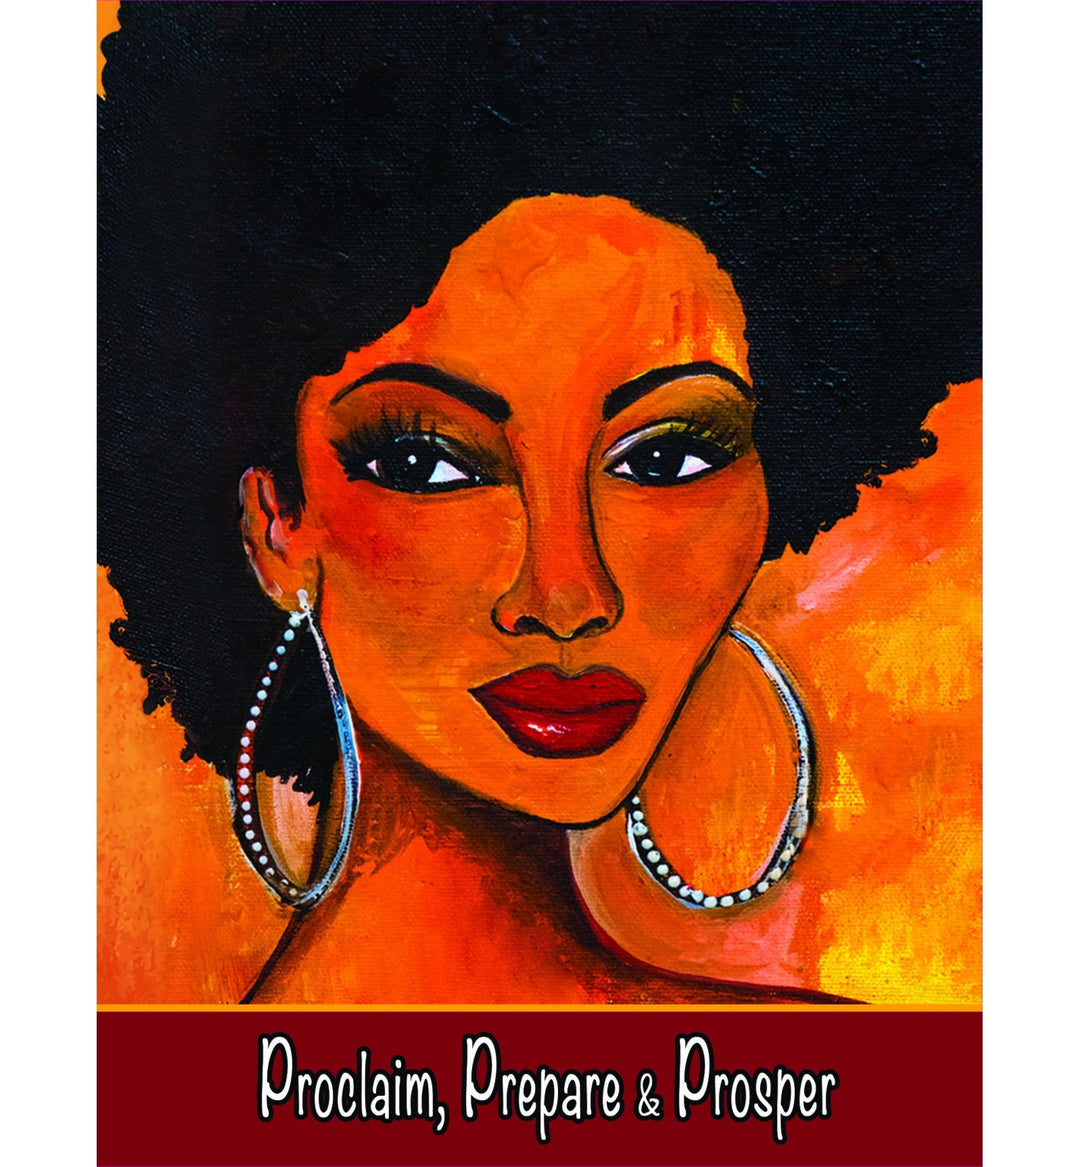 Proclaim, Prepare & Prosper: African American Note Card by GBaby